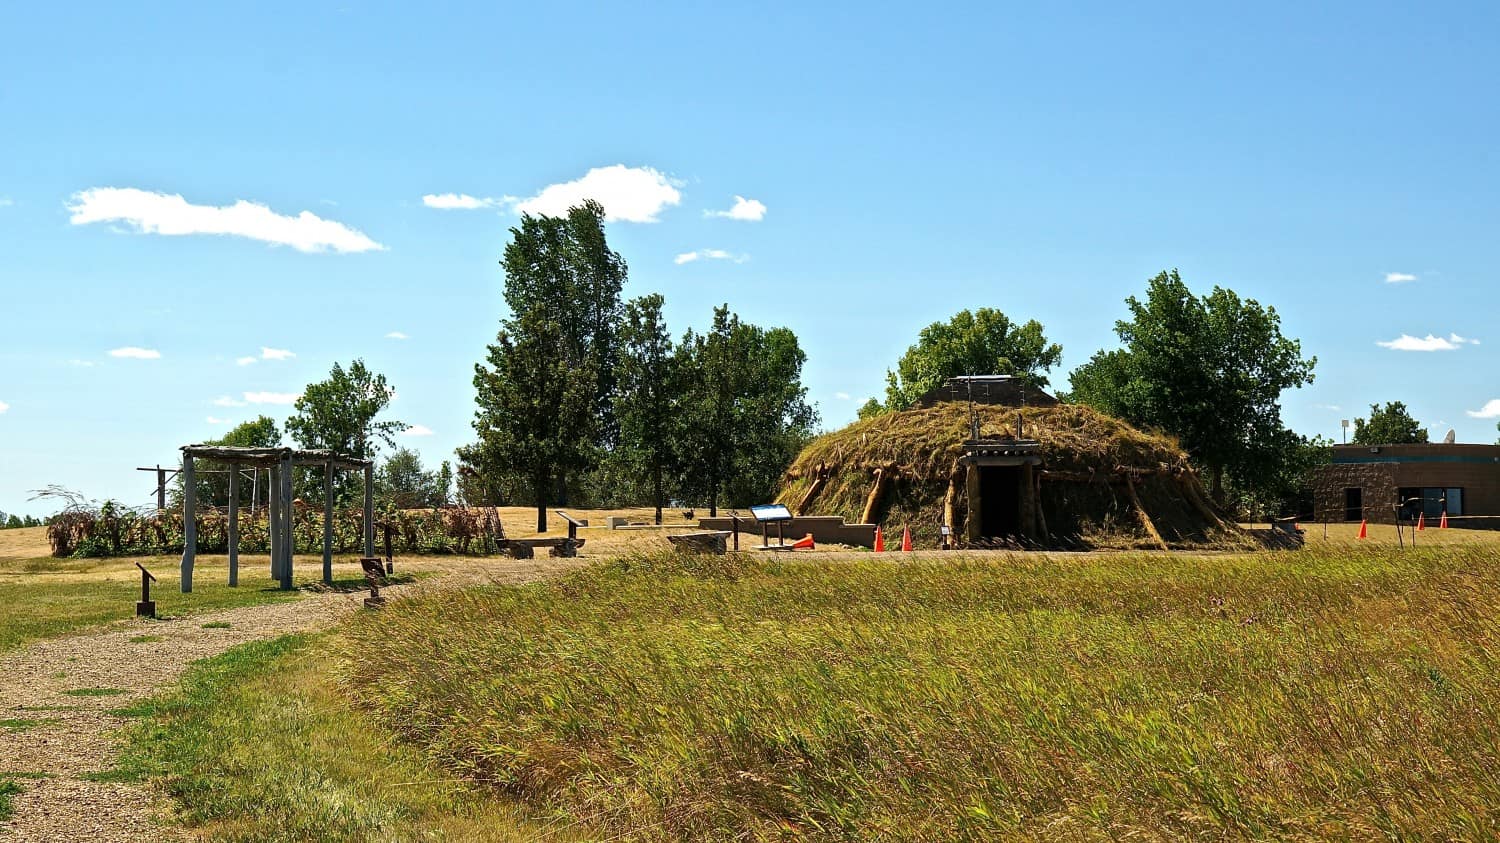 Knife River Indian Villages National Historic Site - ND